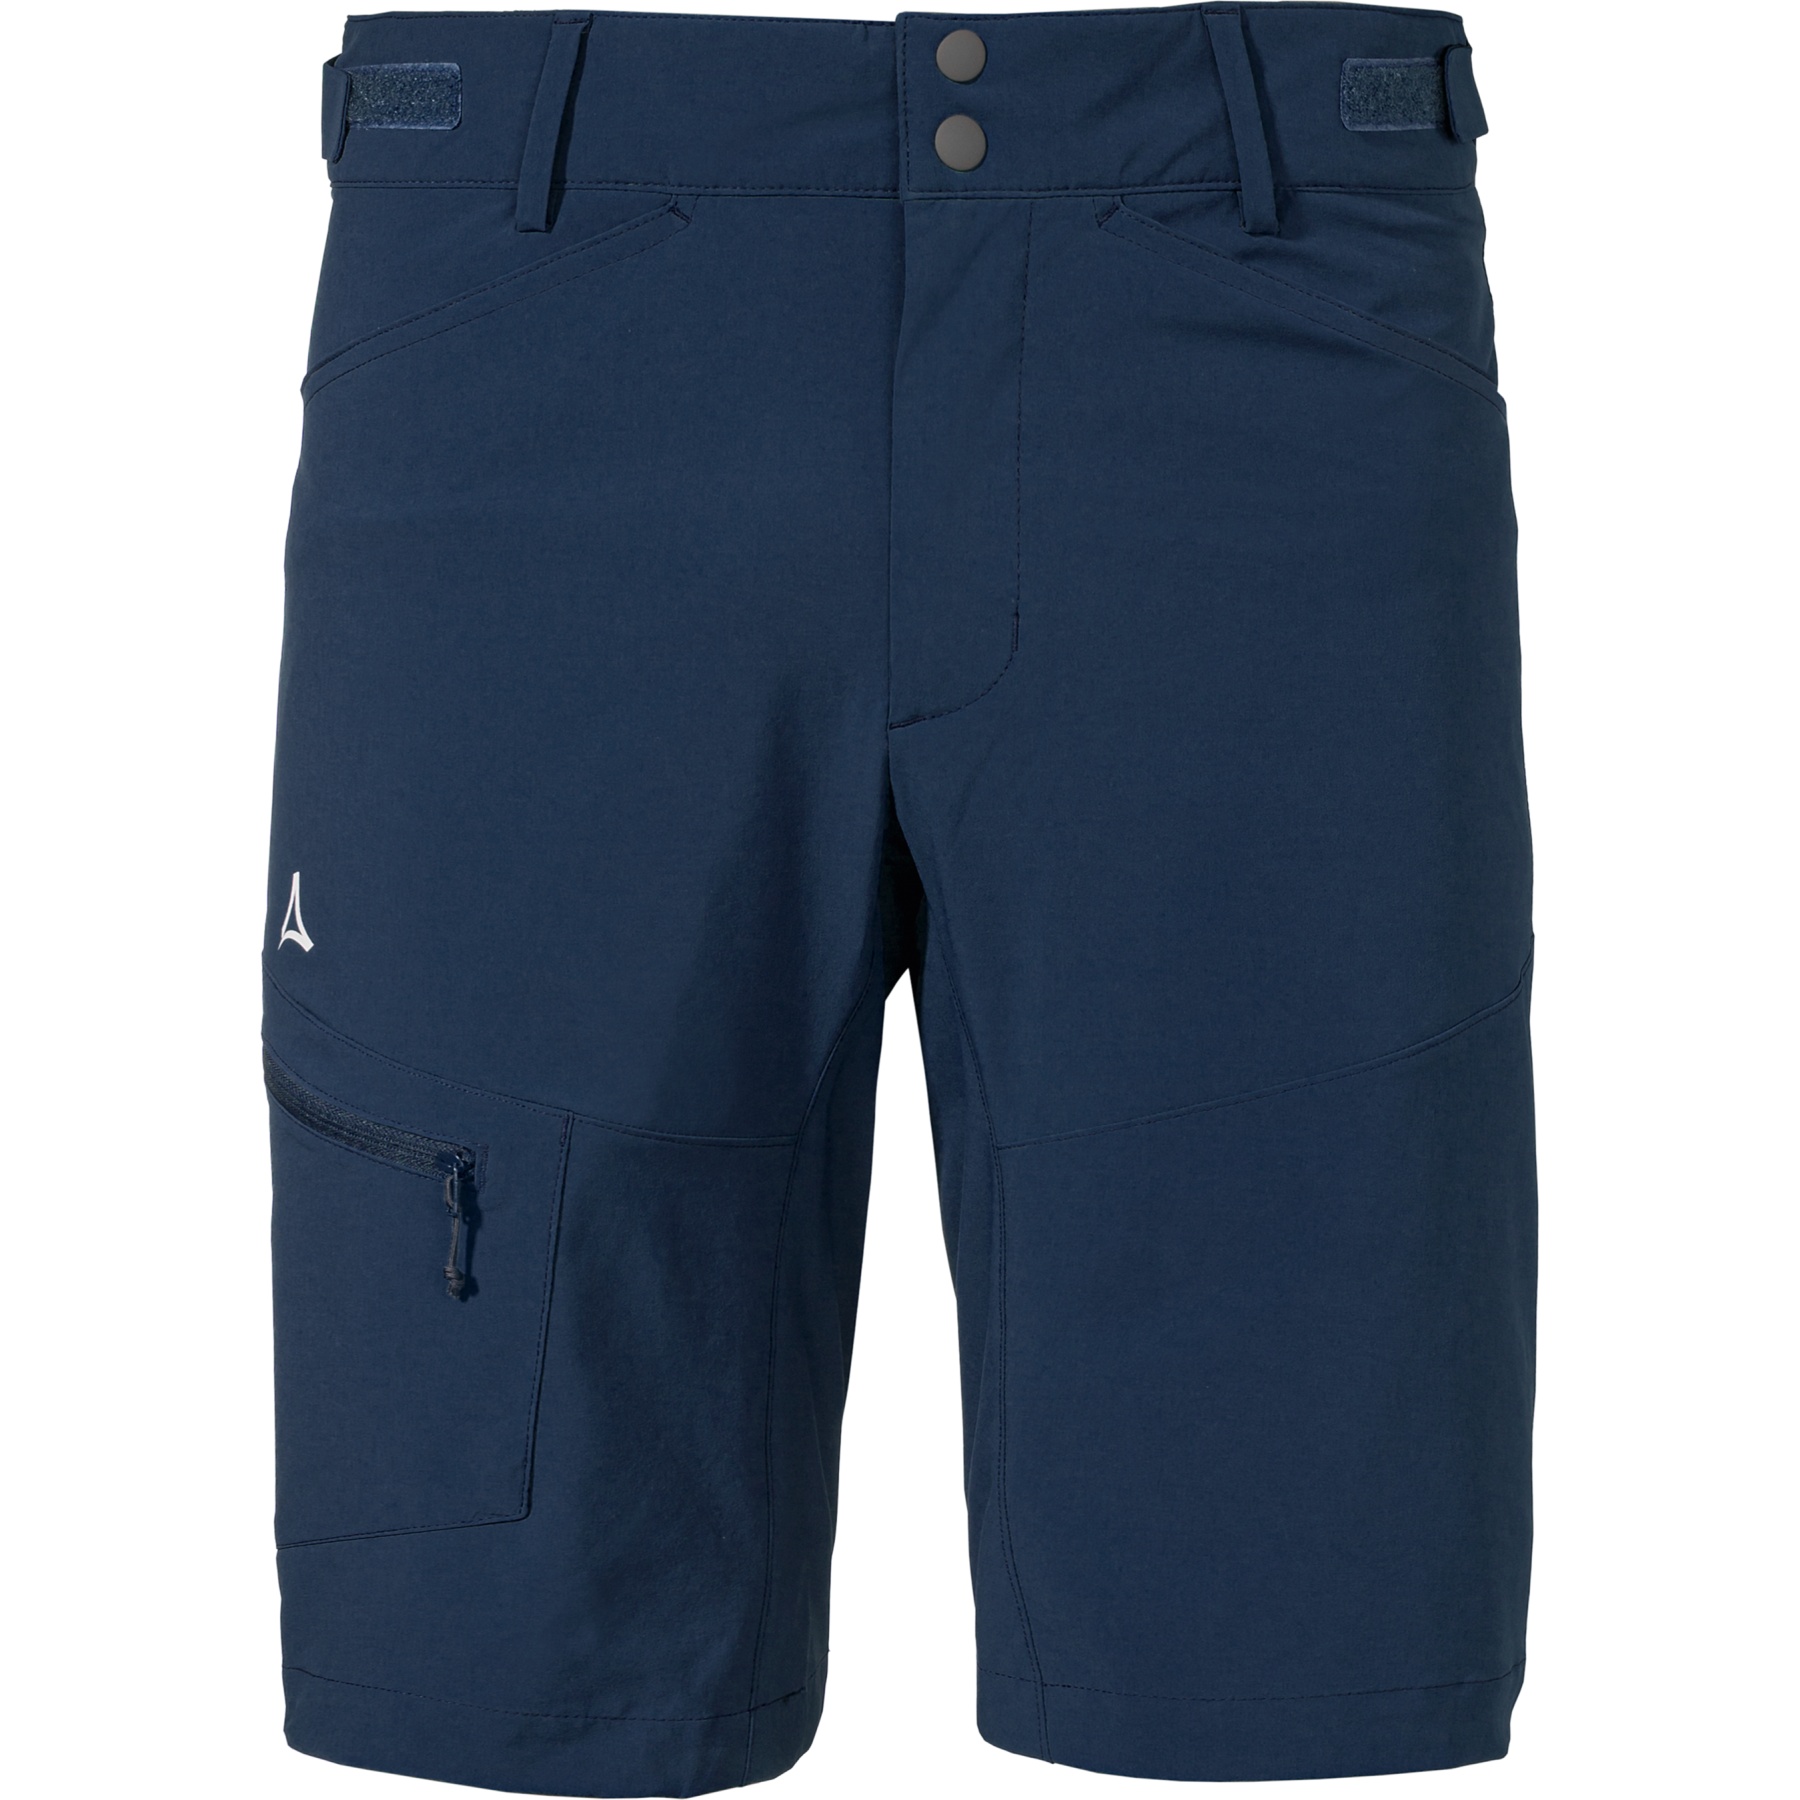 Schöffel Algarve Shorts - dress blues 8180 | BIKE24